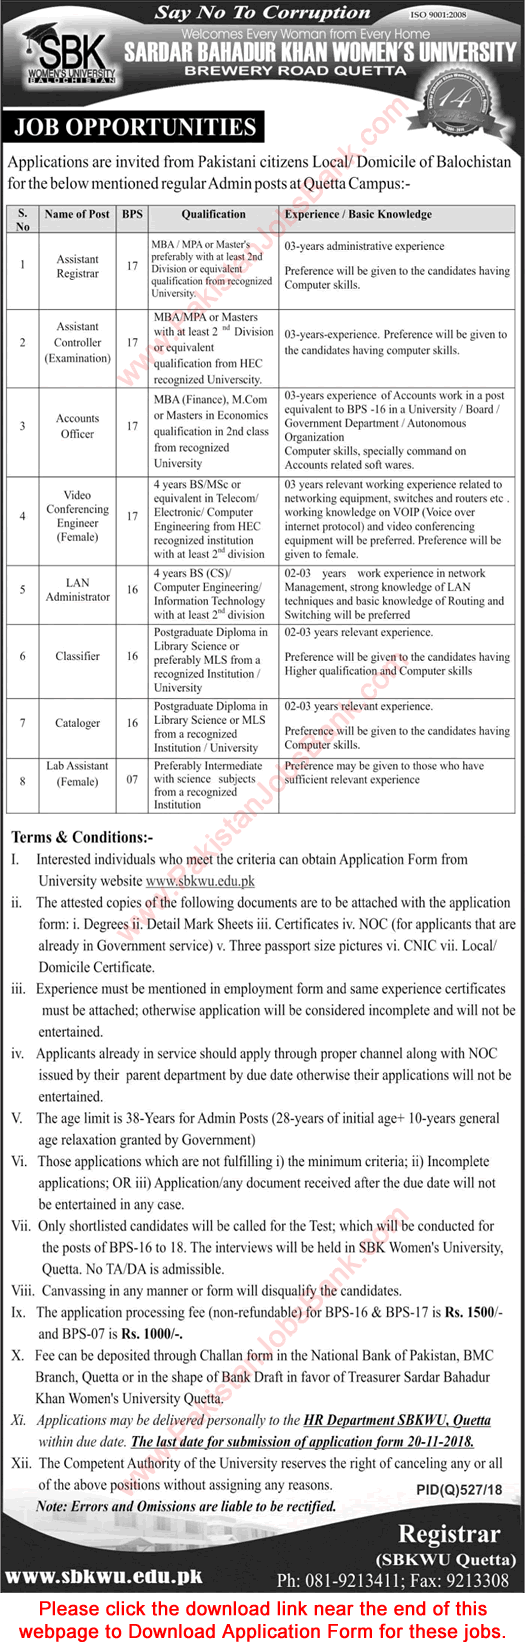 Sardar Bahadur Khan Women's University Quetta Jobs November 2018 SBKWU Application Form Latest